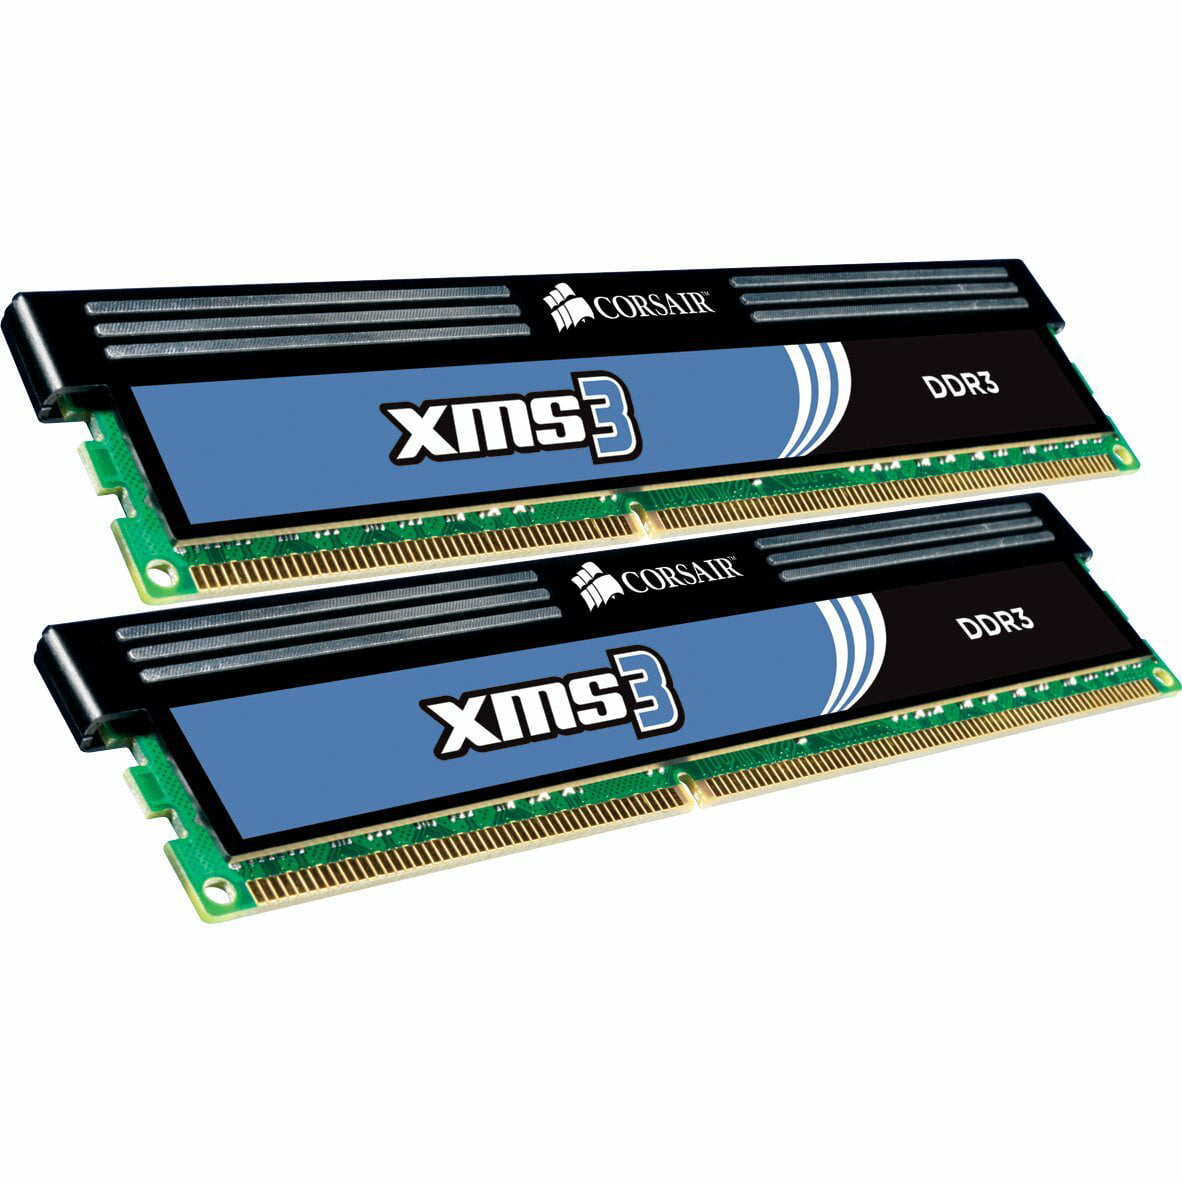 XMS3 8GB DDR3 SDRAM Memory Module - Walmart.com - Walmart.com